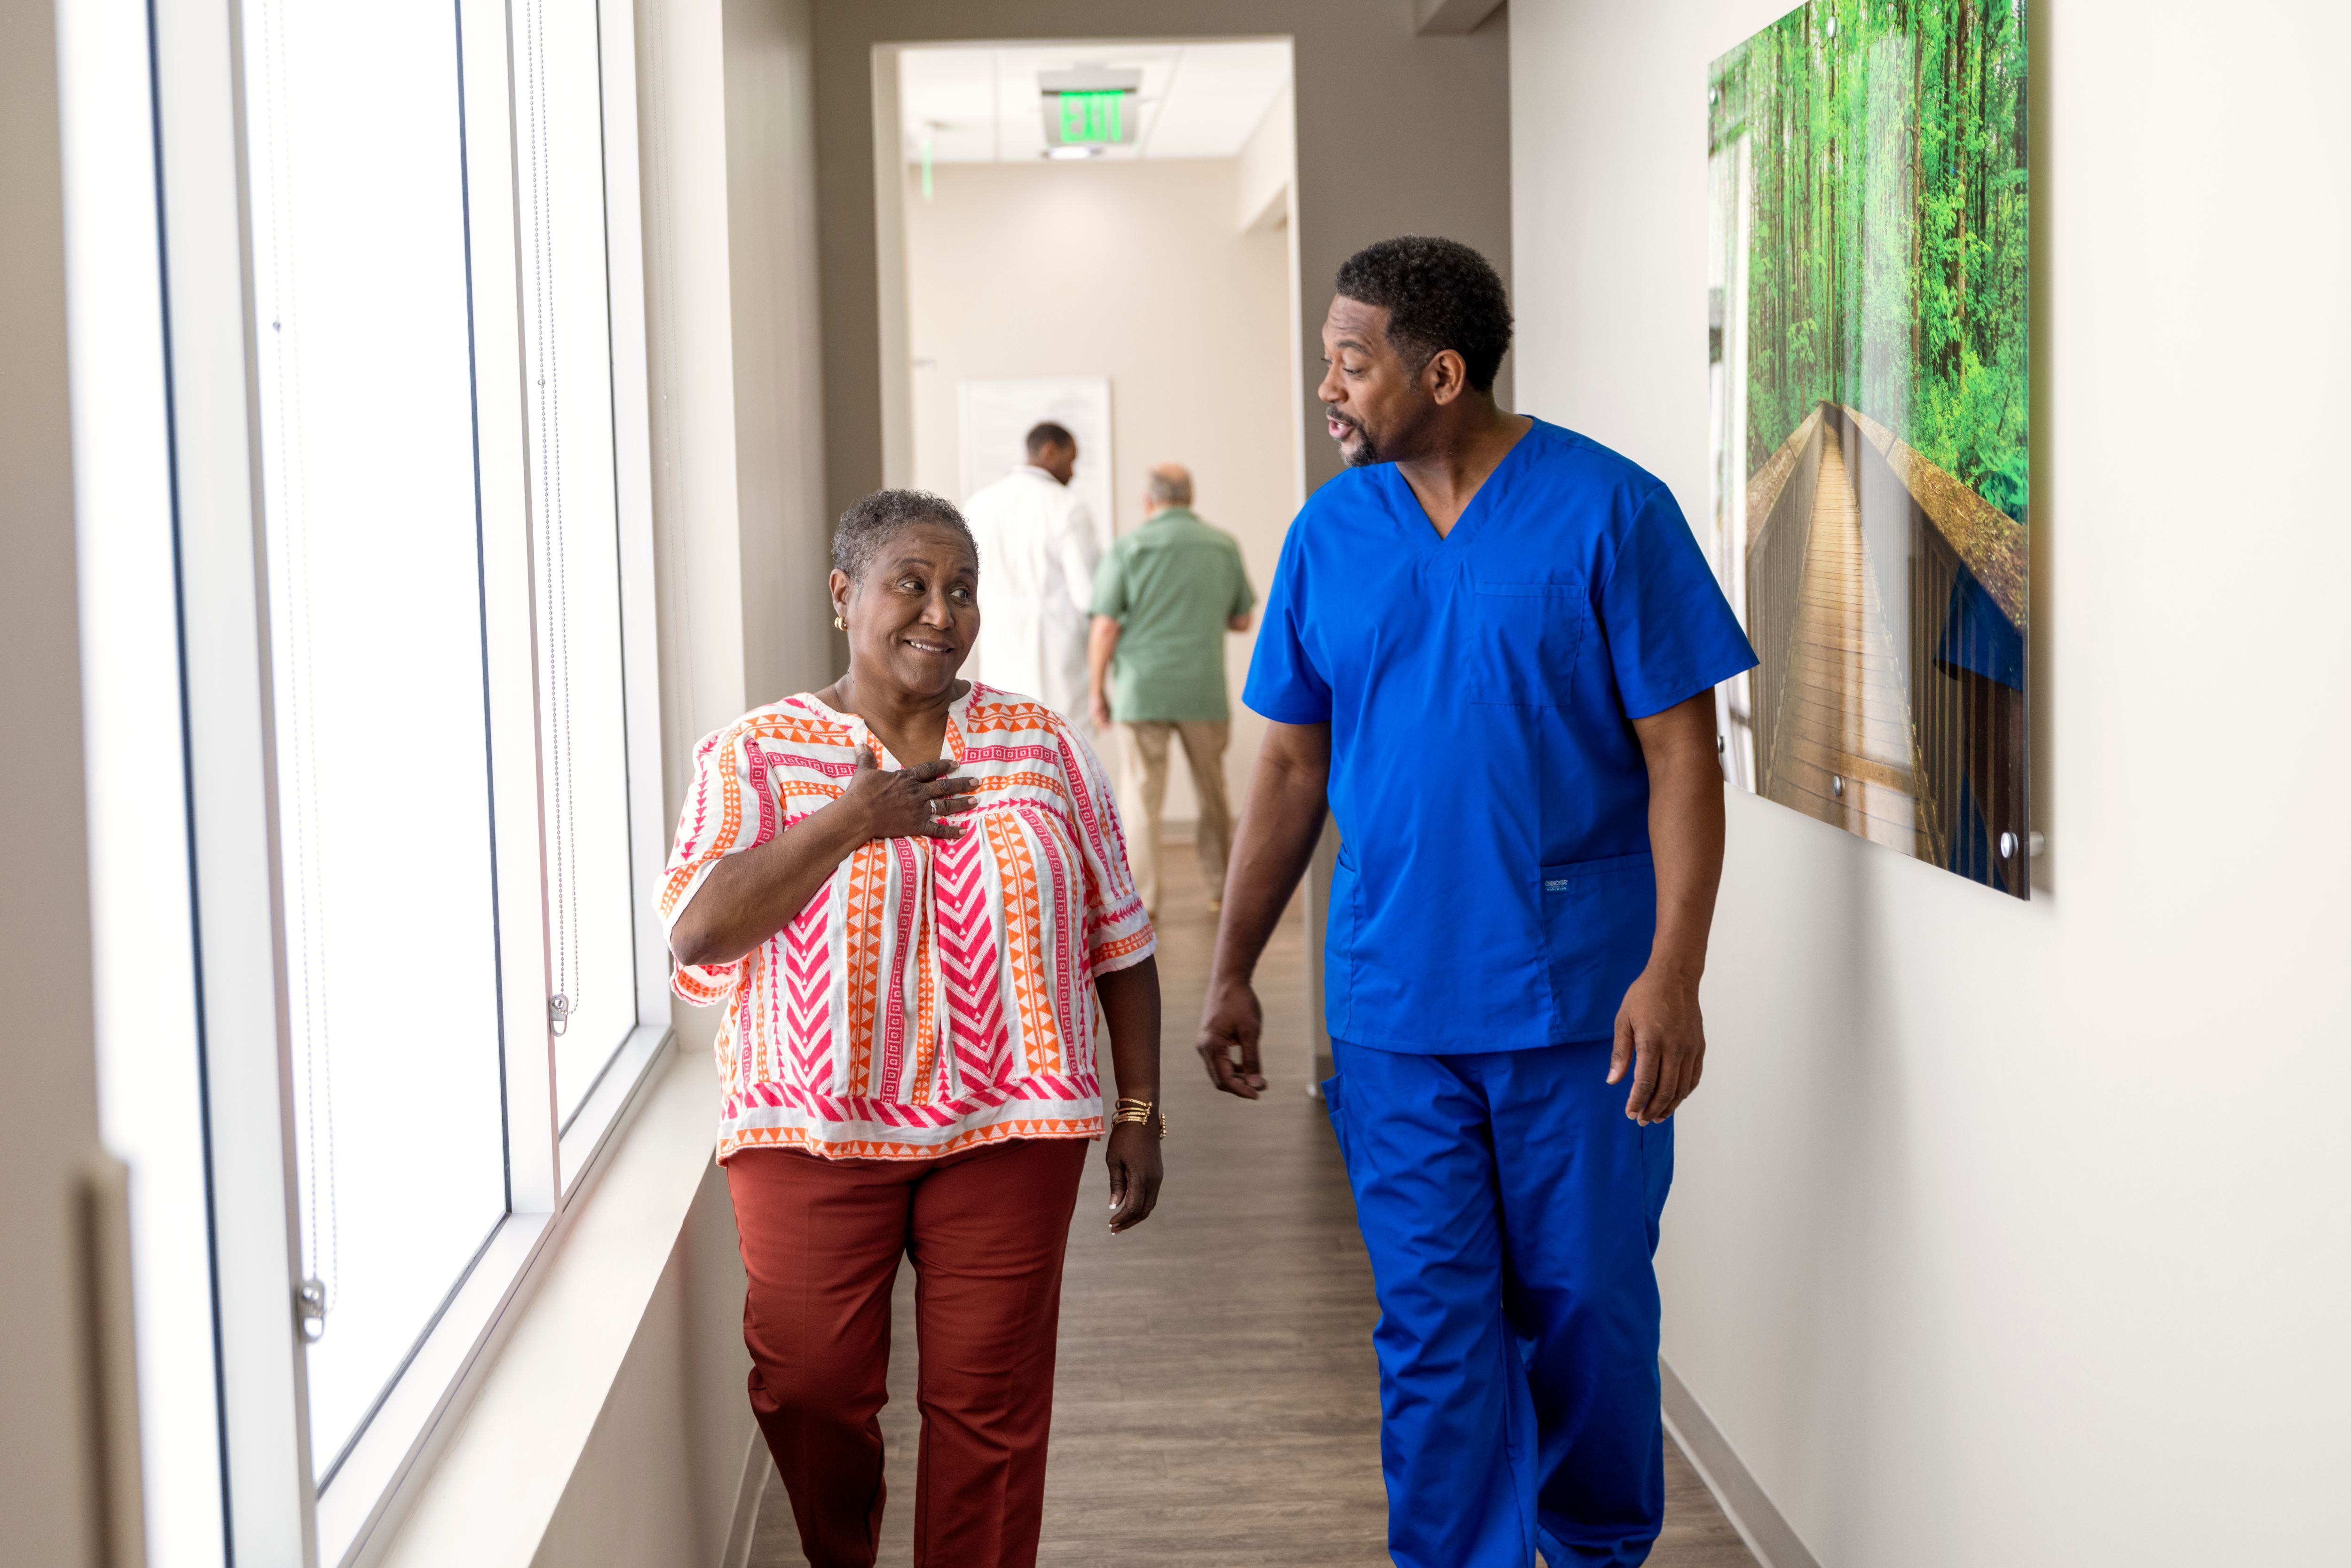 Black woman and male nurse walking down hall